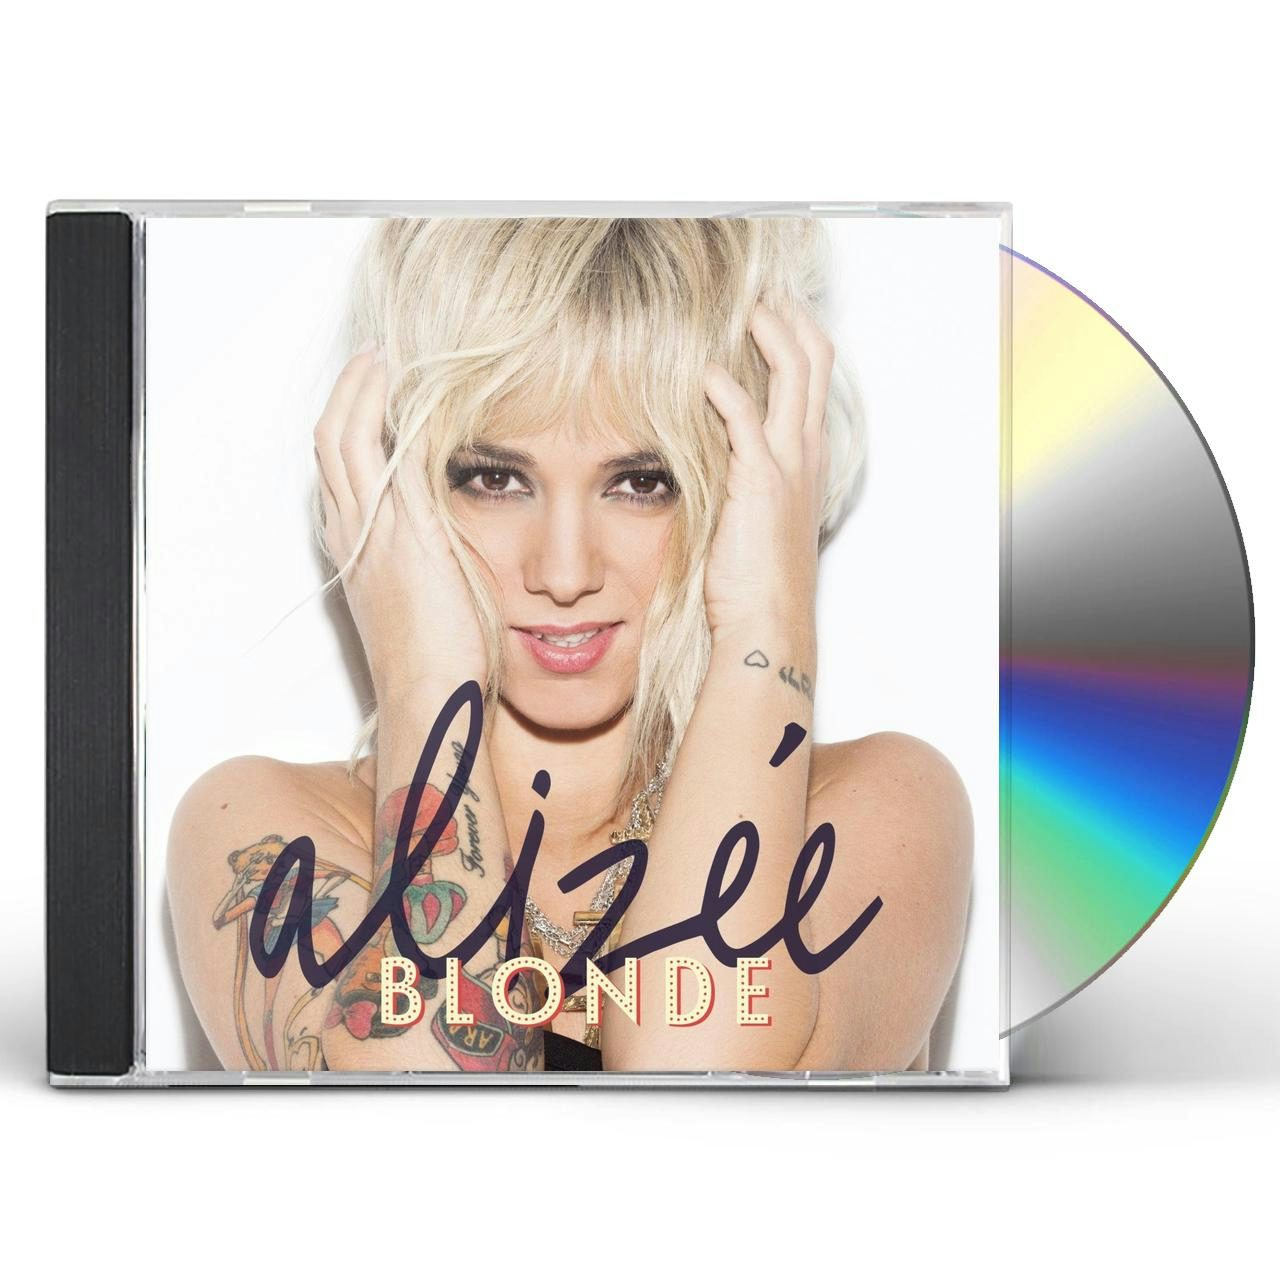 blonde cd - Alizee